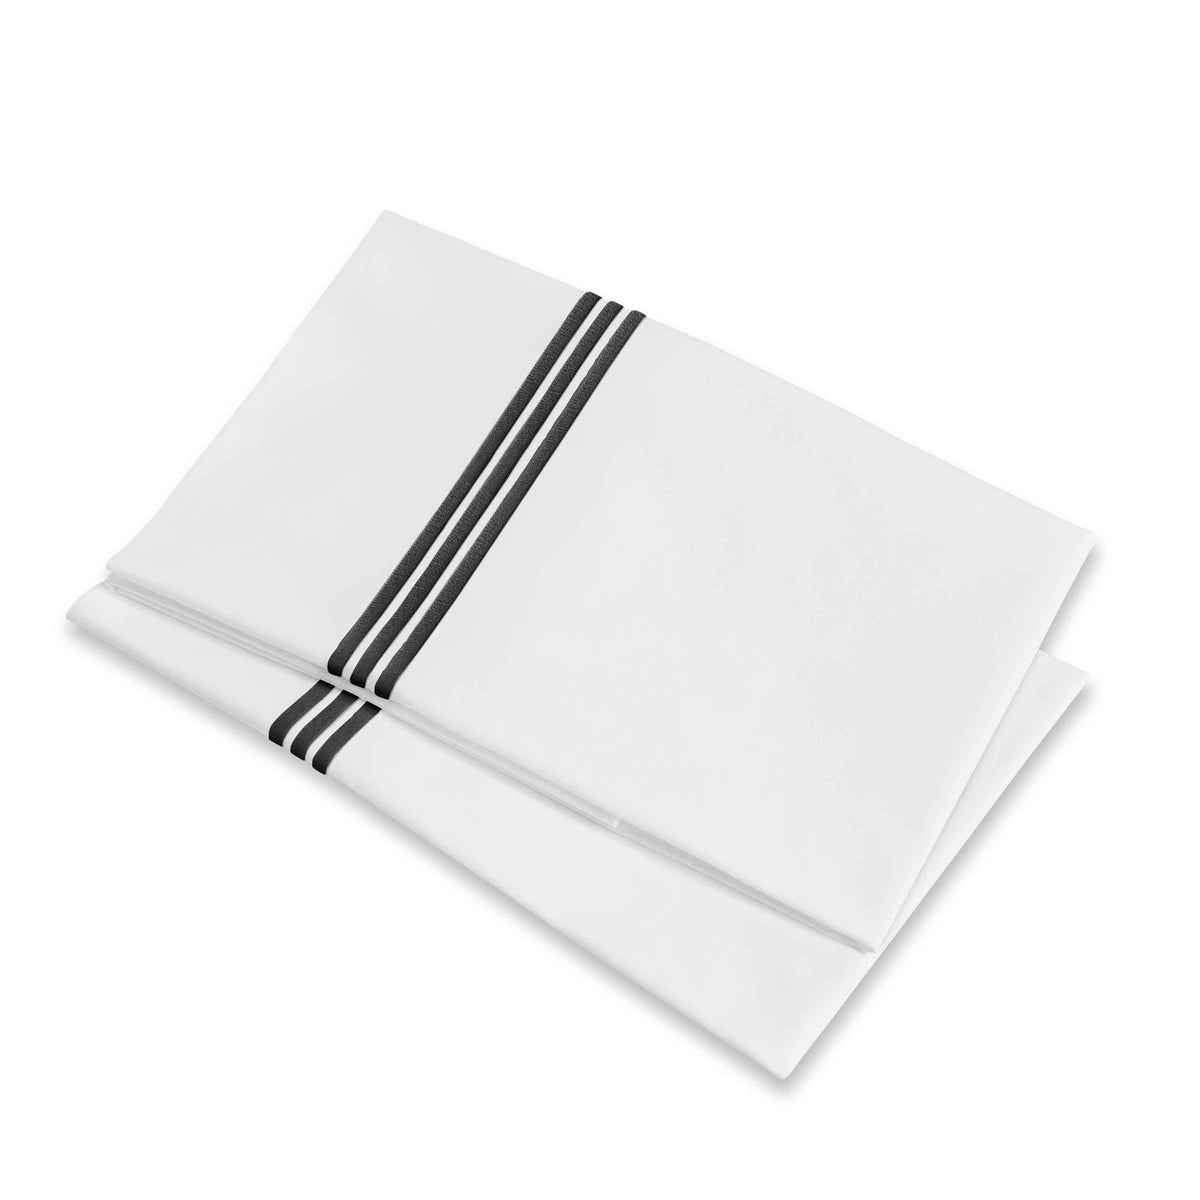 Folded Pillowcases of Signoria Platinum Percale Bedding in White/Black Color